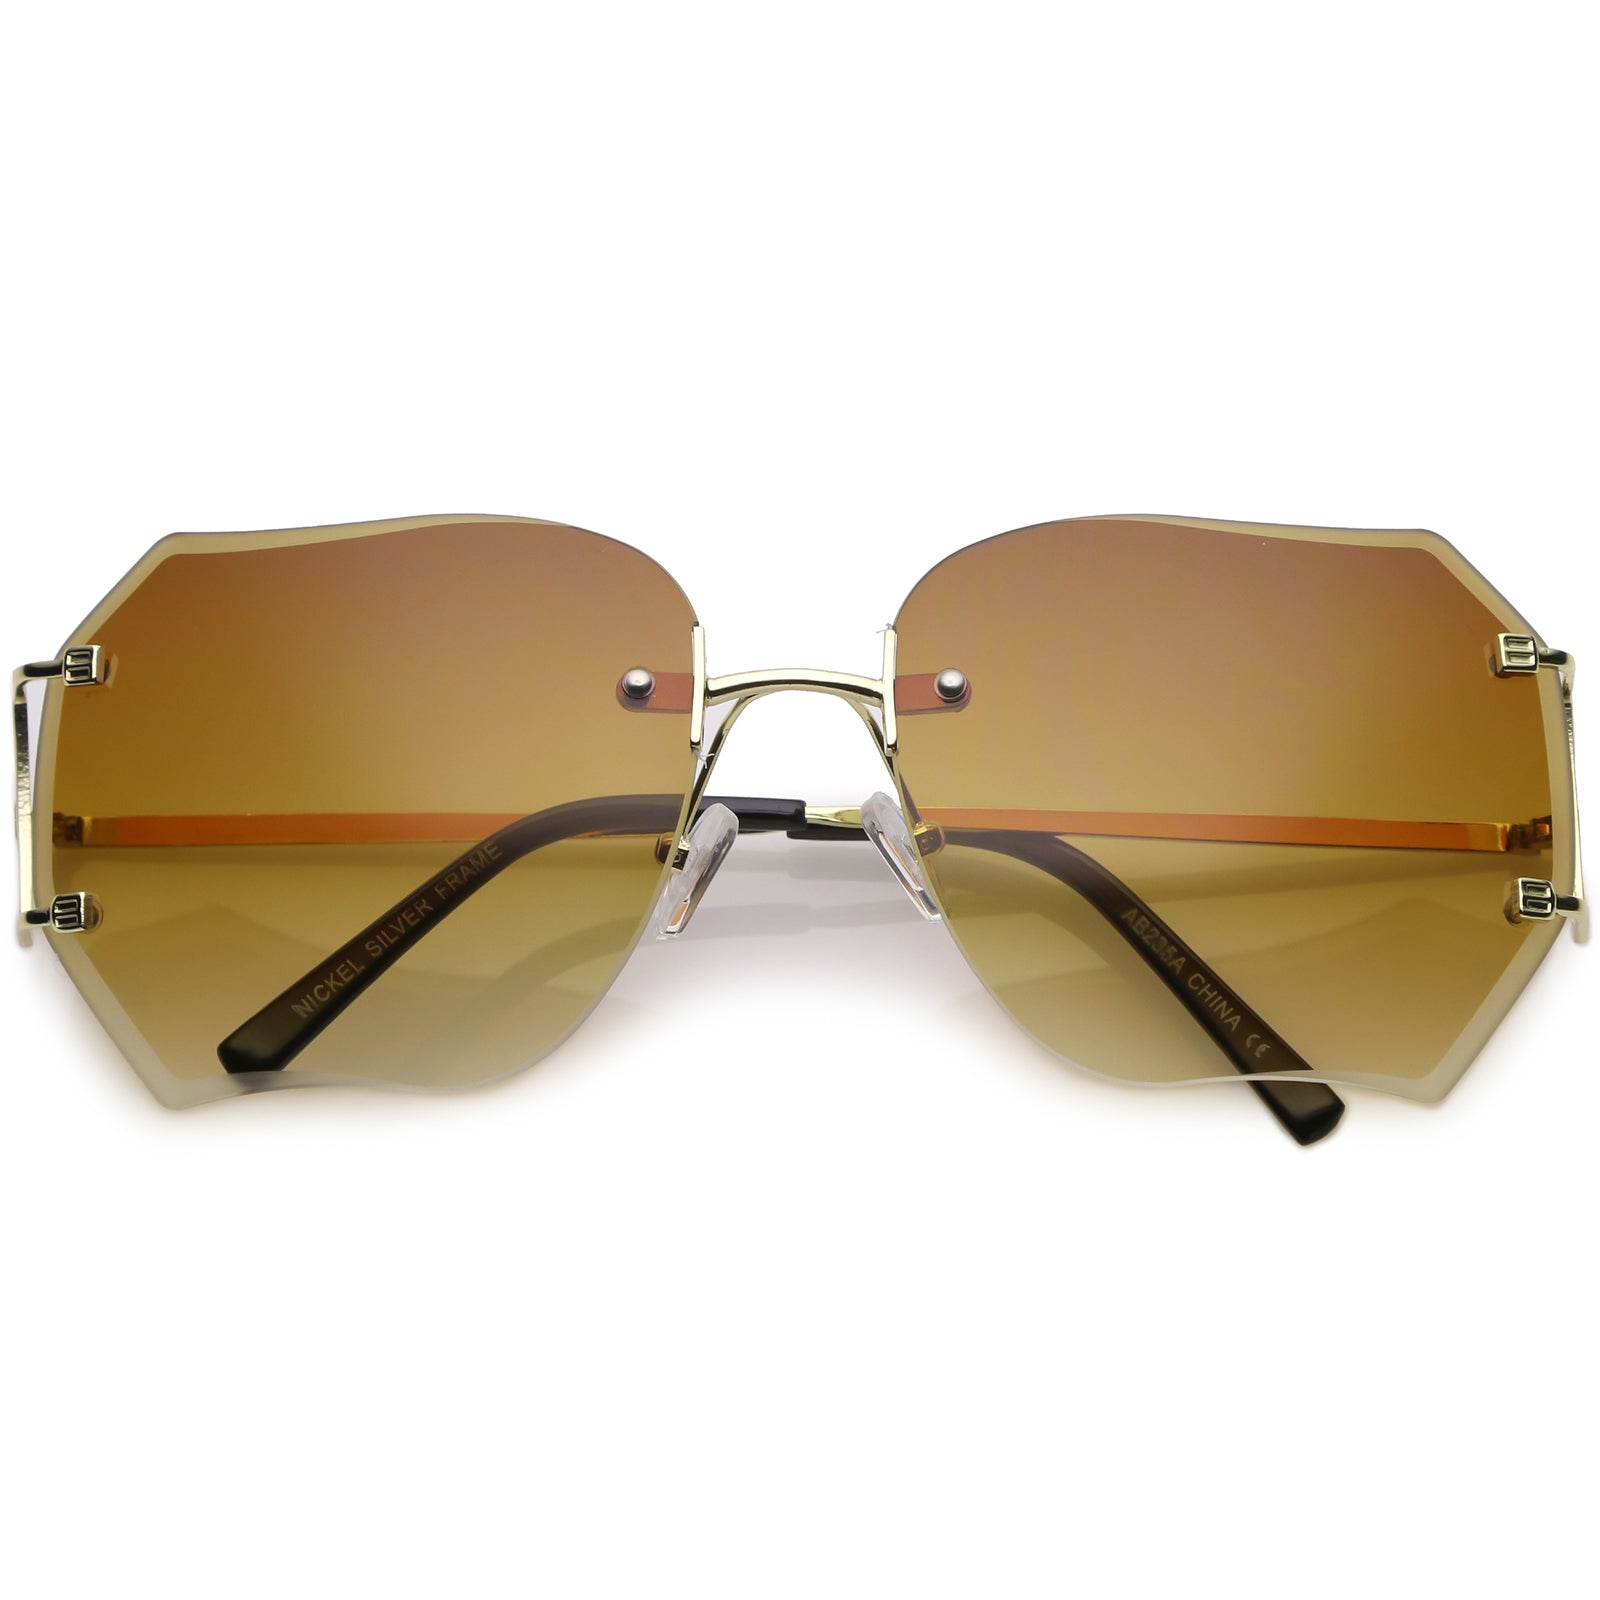 Oversize Rimless Square Sunglasses Slim Metal Arms Beveled Gradient Lens 61mm, Gold / Amber